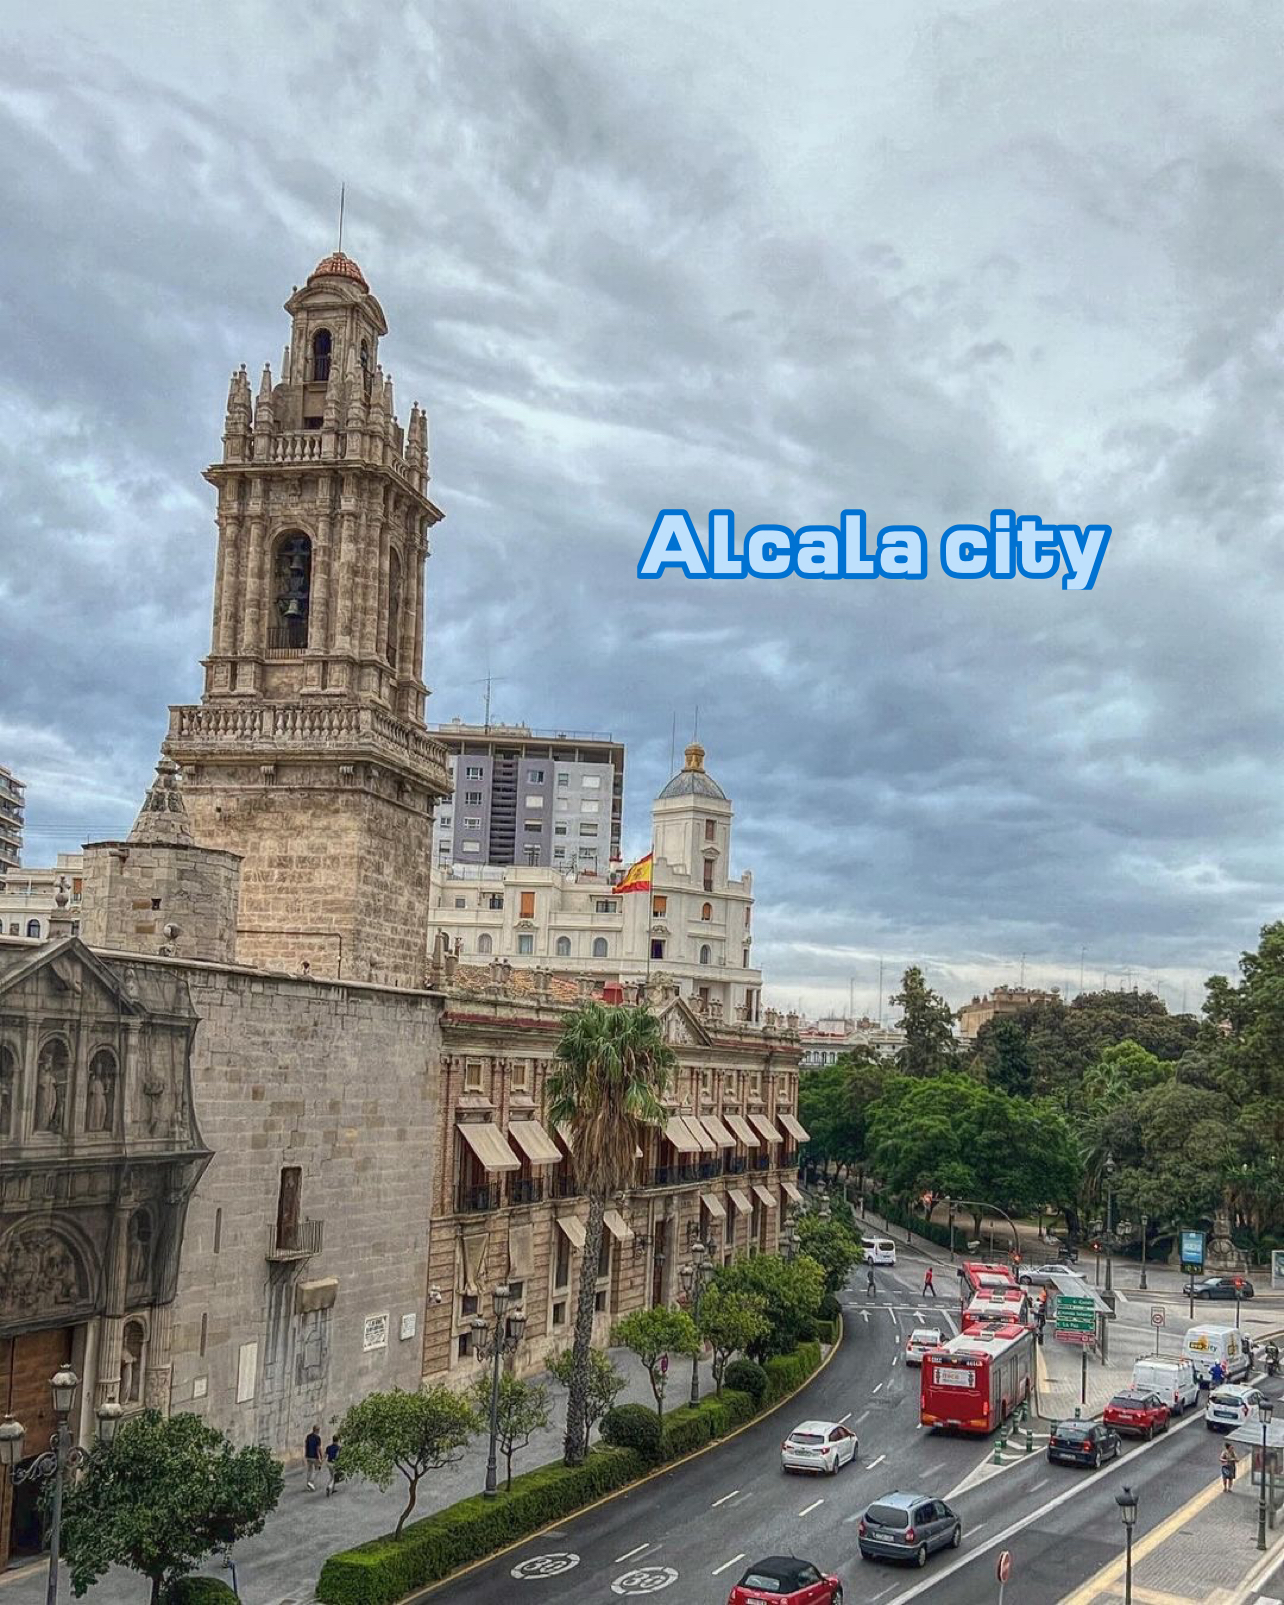 Alcala city